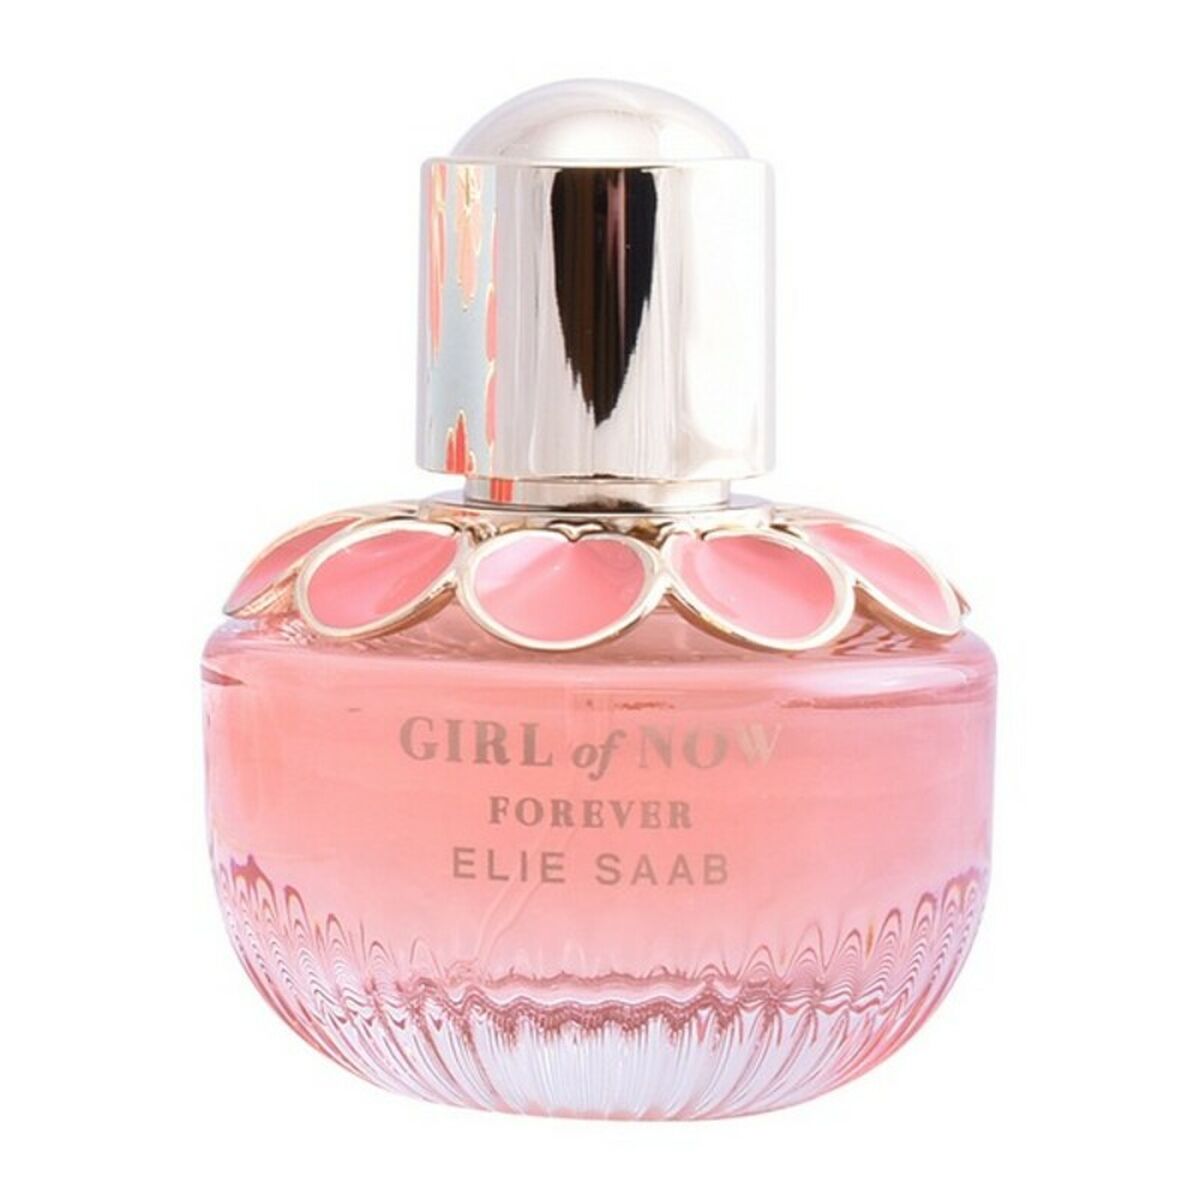 Perfume kobiet Elie Saab Edp Girl of Now Forever (90 ml)